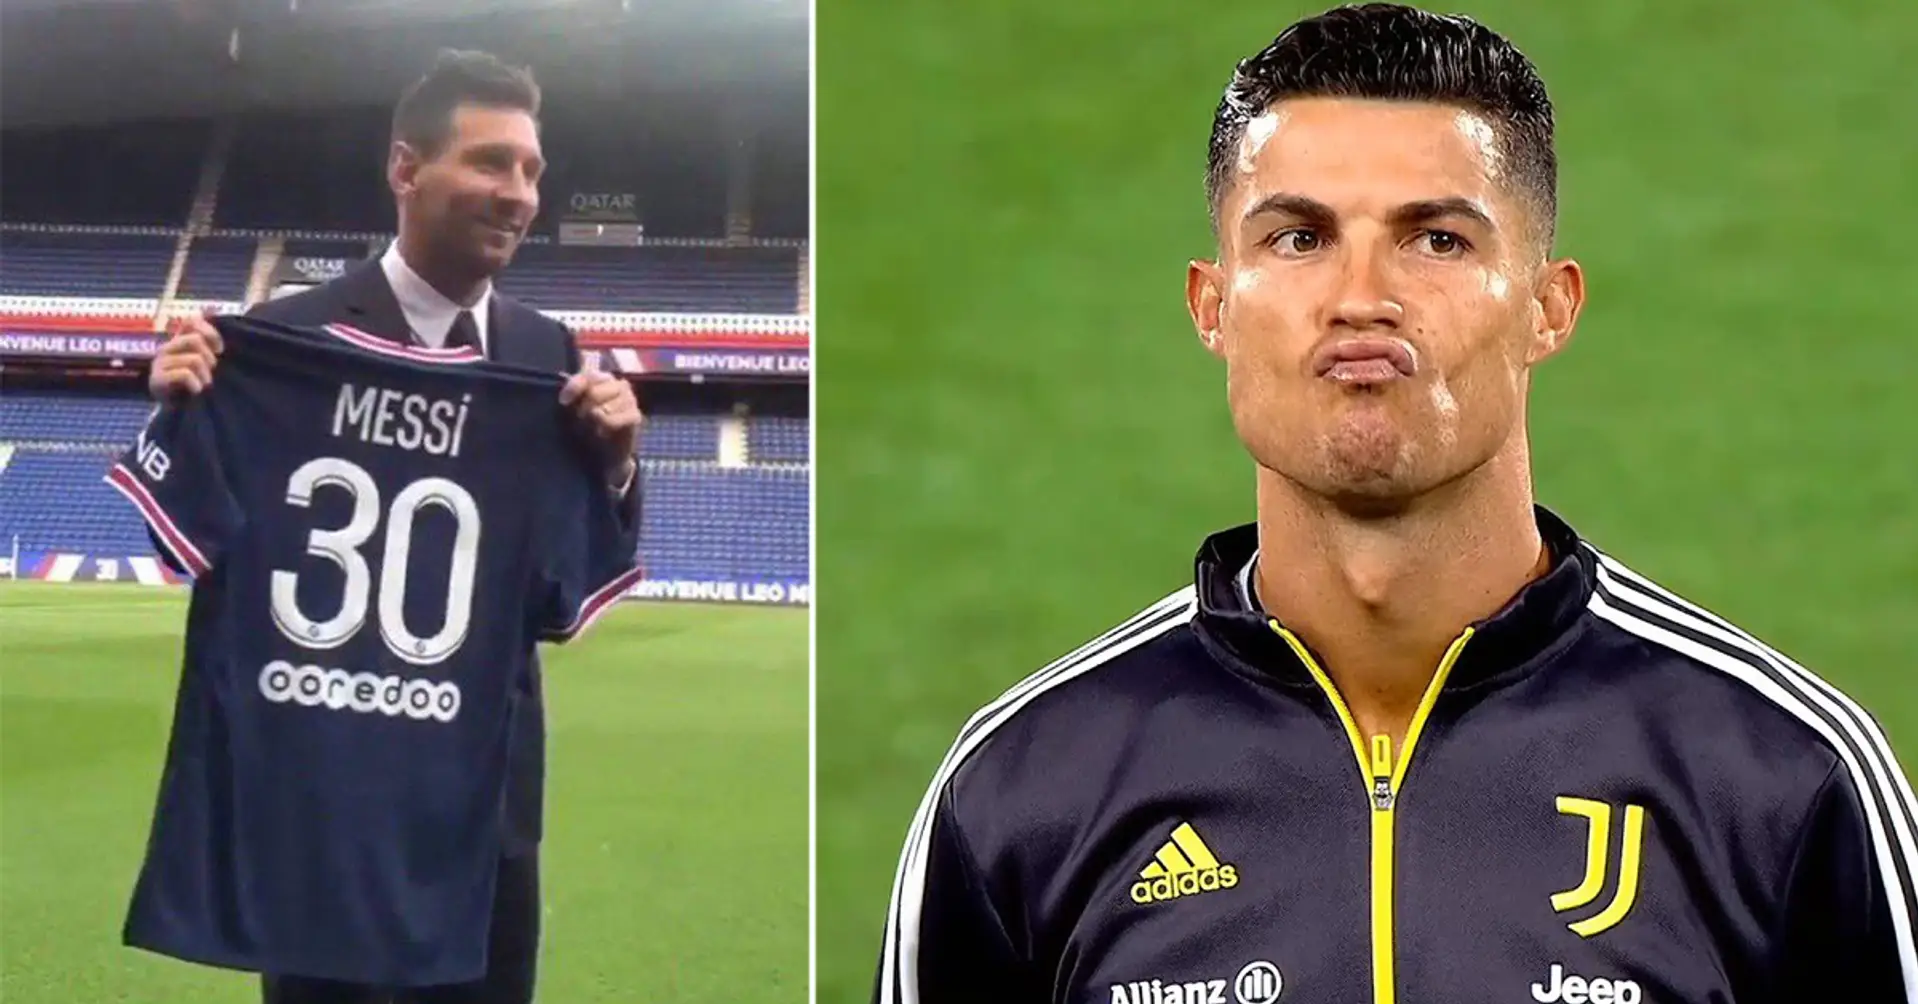 Cristiano Ronaldo tells cameraman to focus on game - AS USA